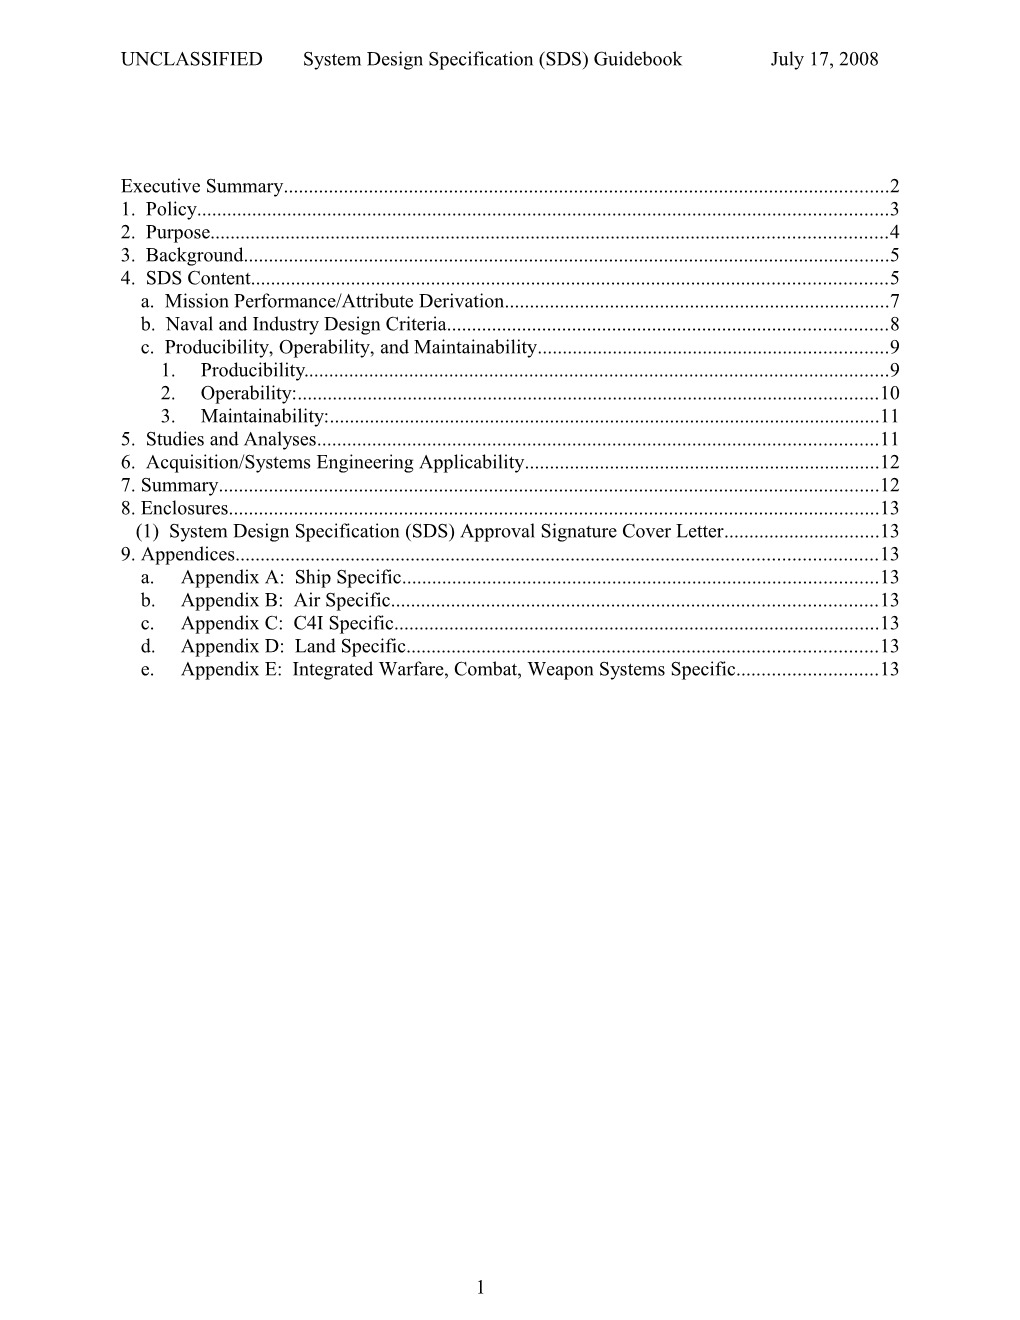 System Design Specification (SDS) Guidebook (Final - July 2008)